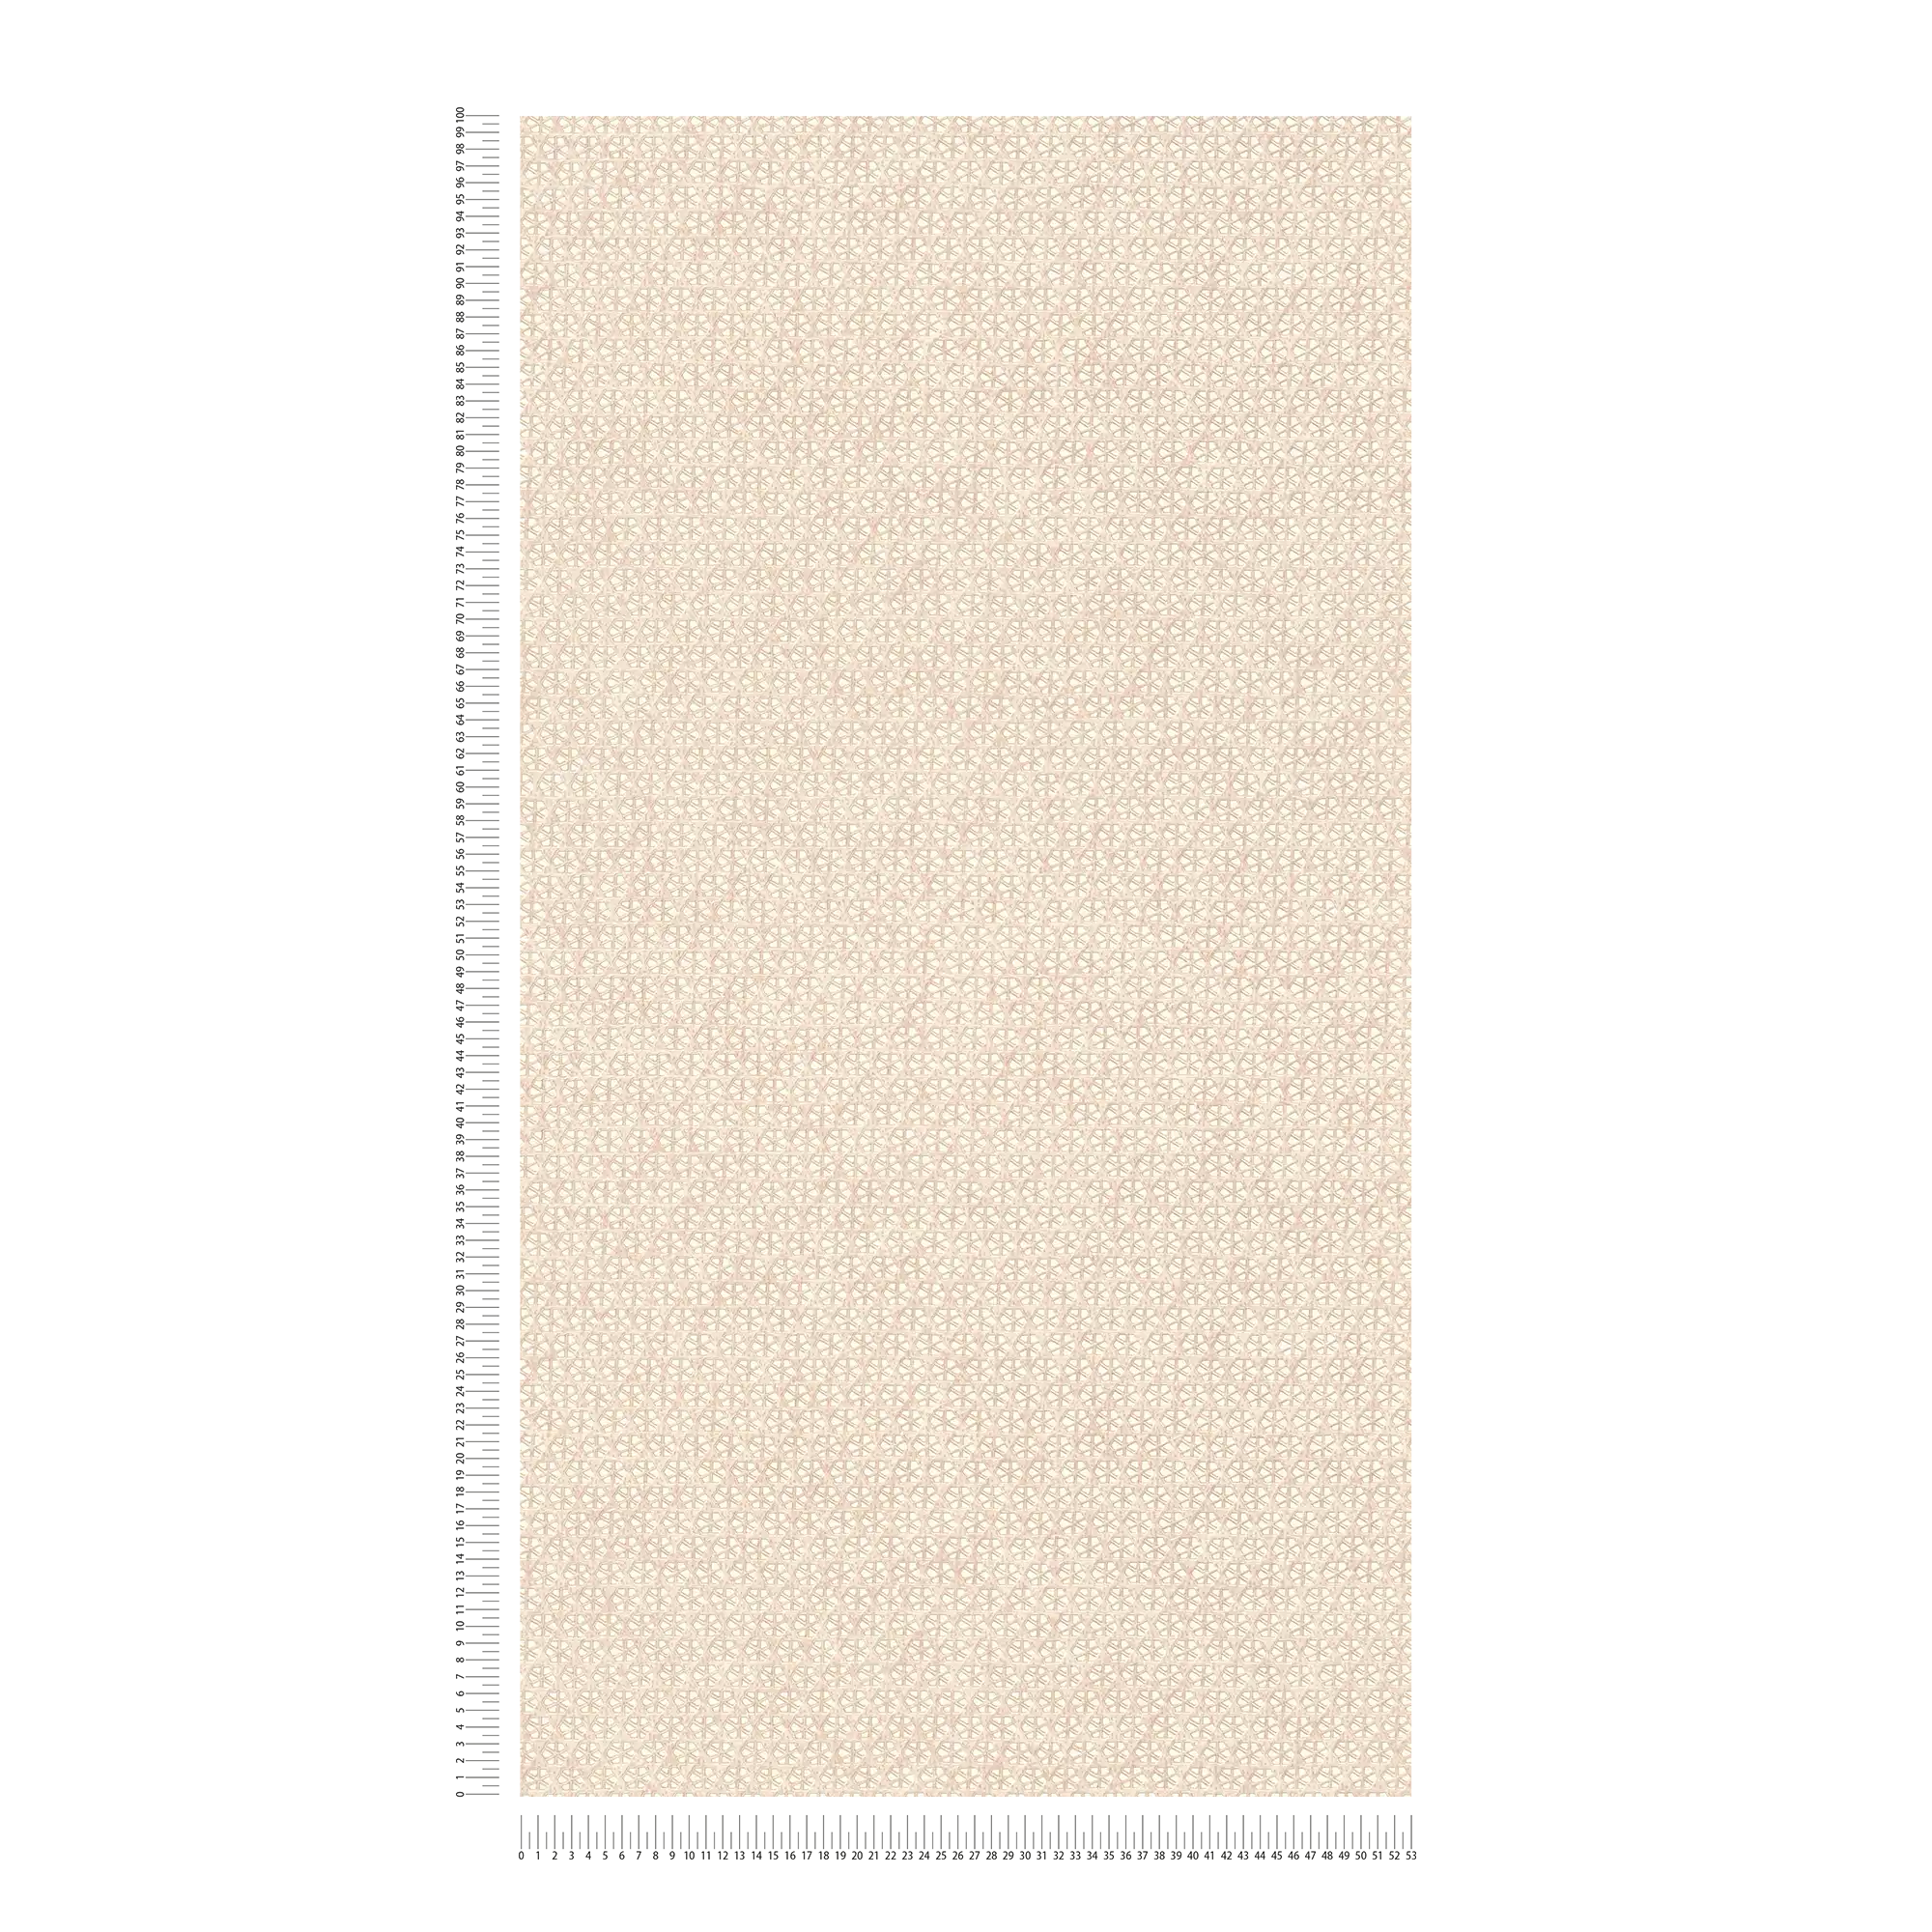             Papier peint Wiener Geflecht Muster - beige, marron, crème
        